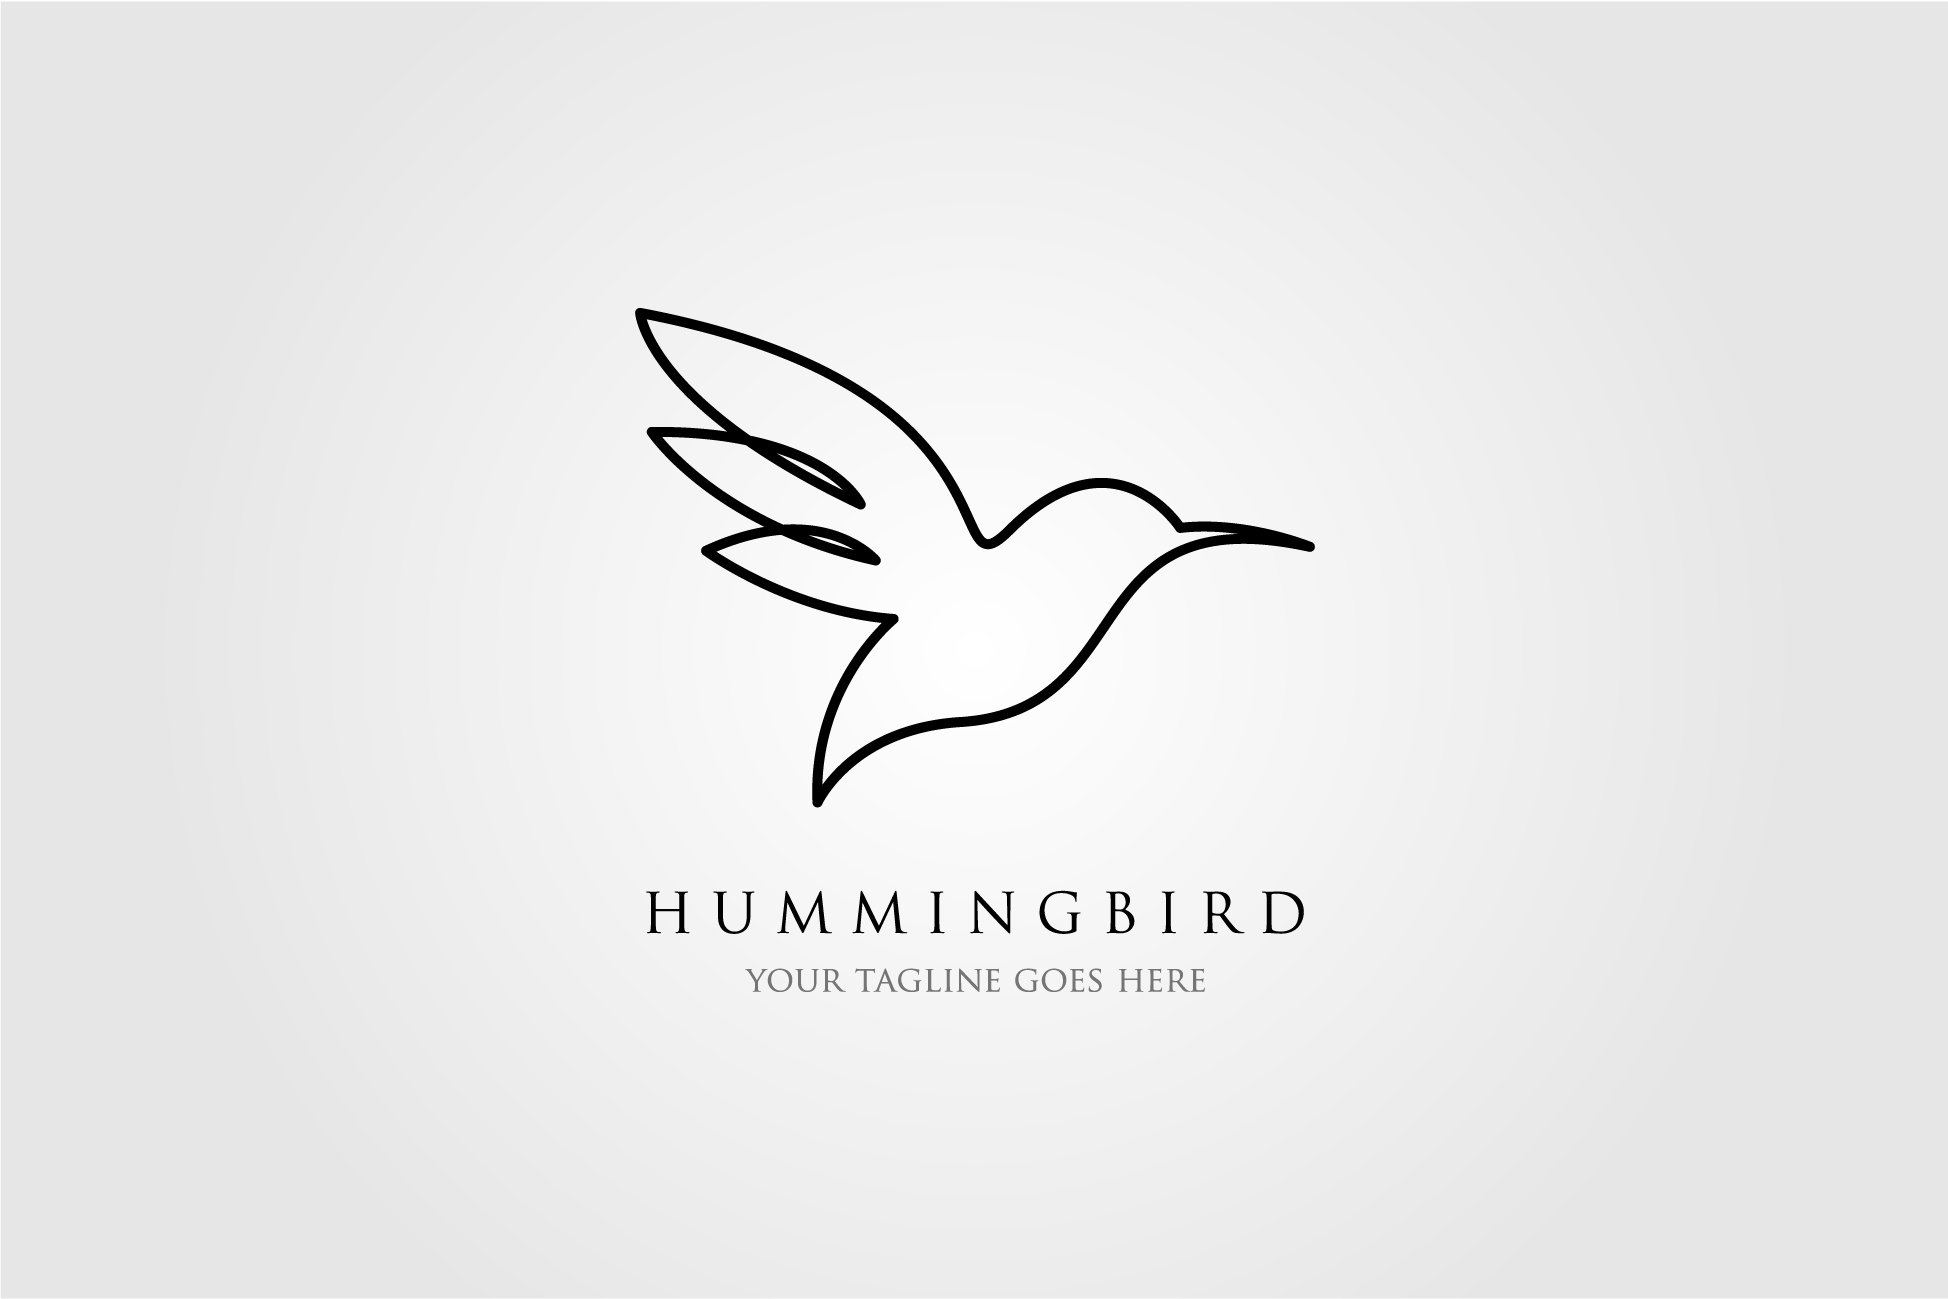 hummingbird line logo icon designs cover image.